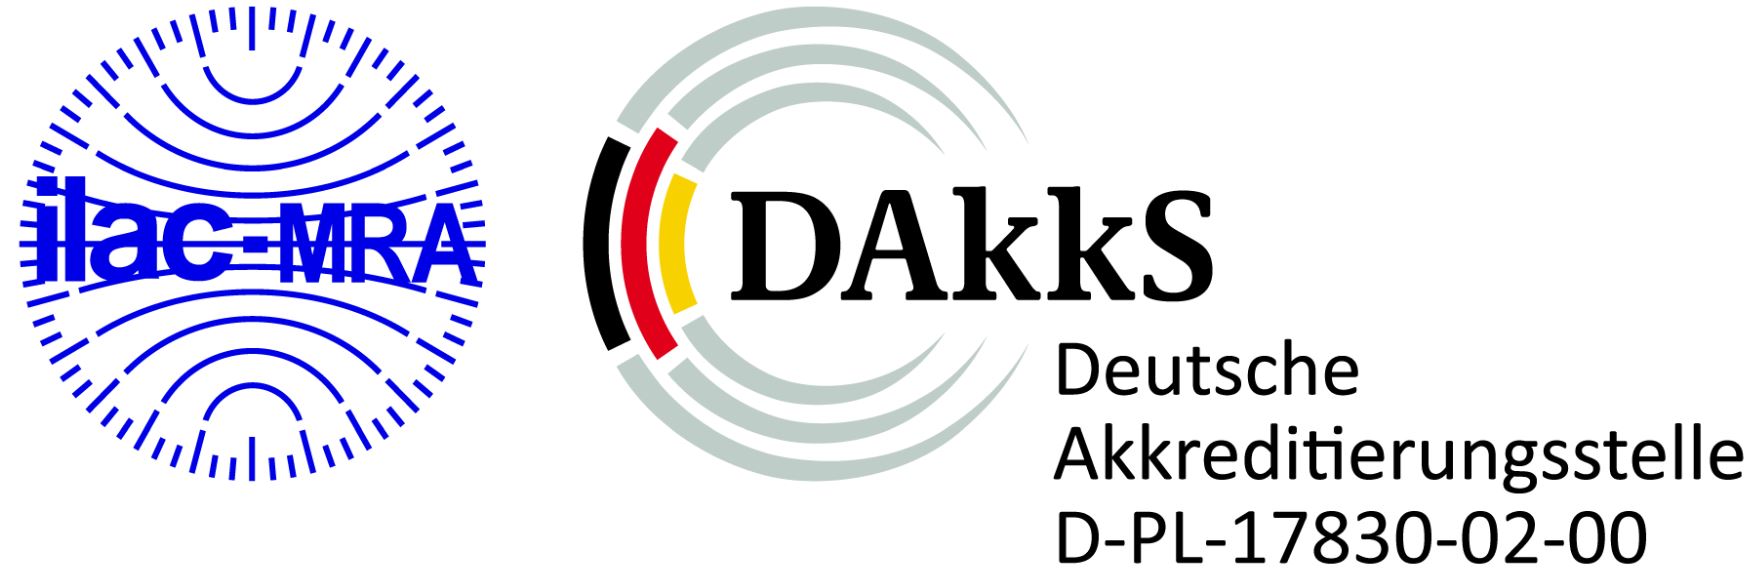 DAkkS ilac logo